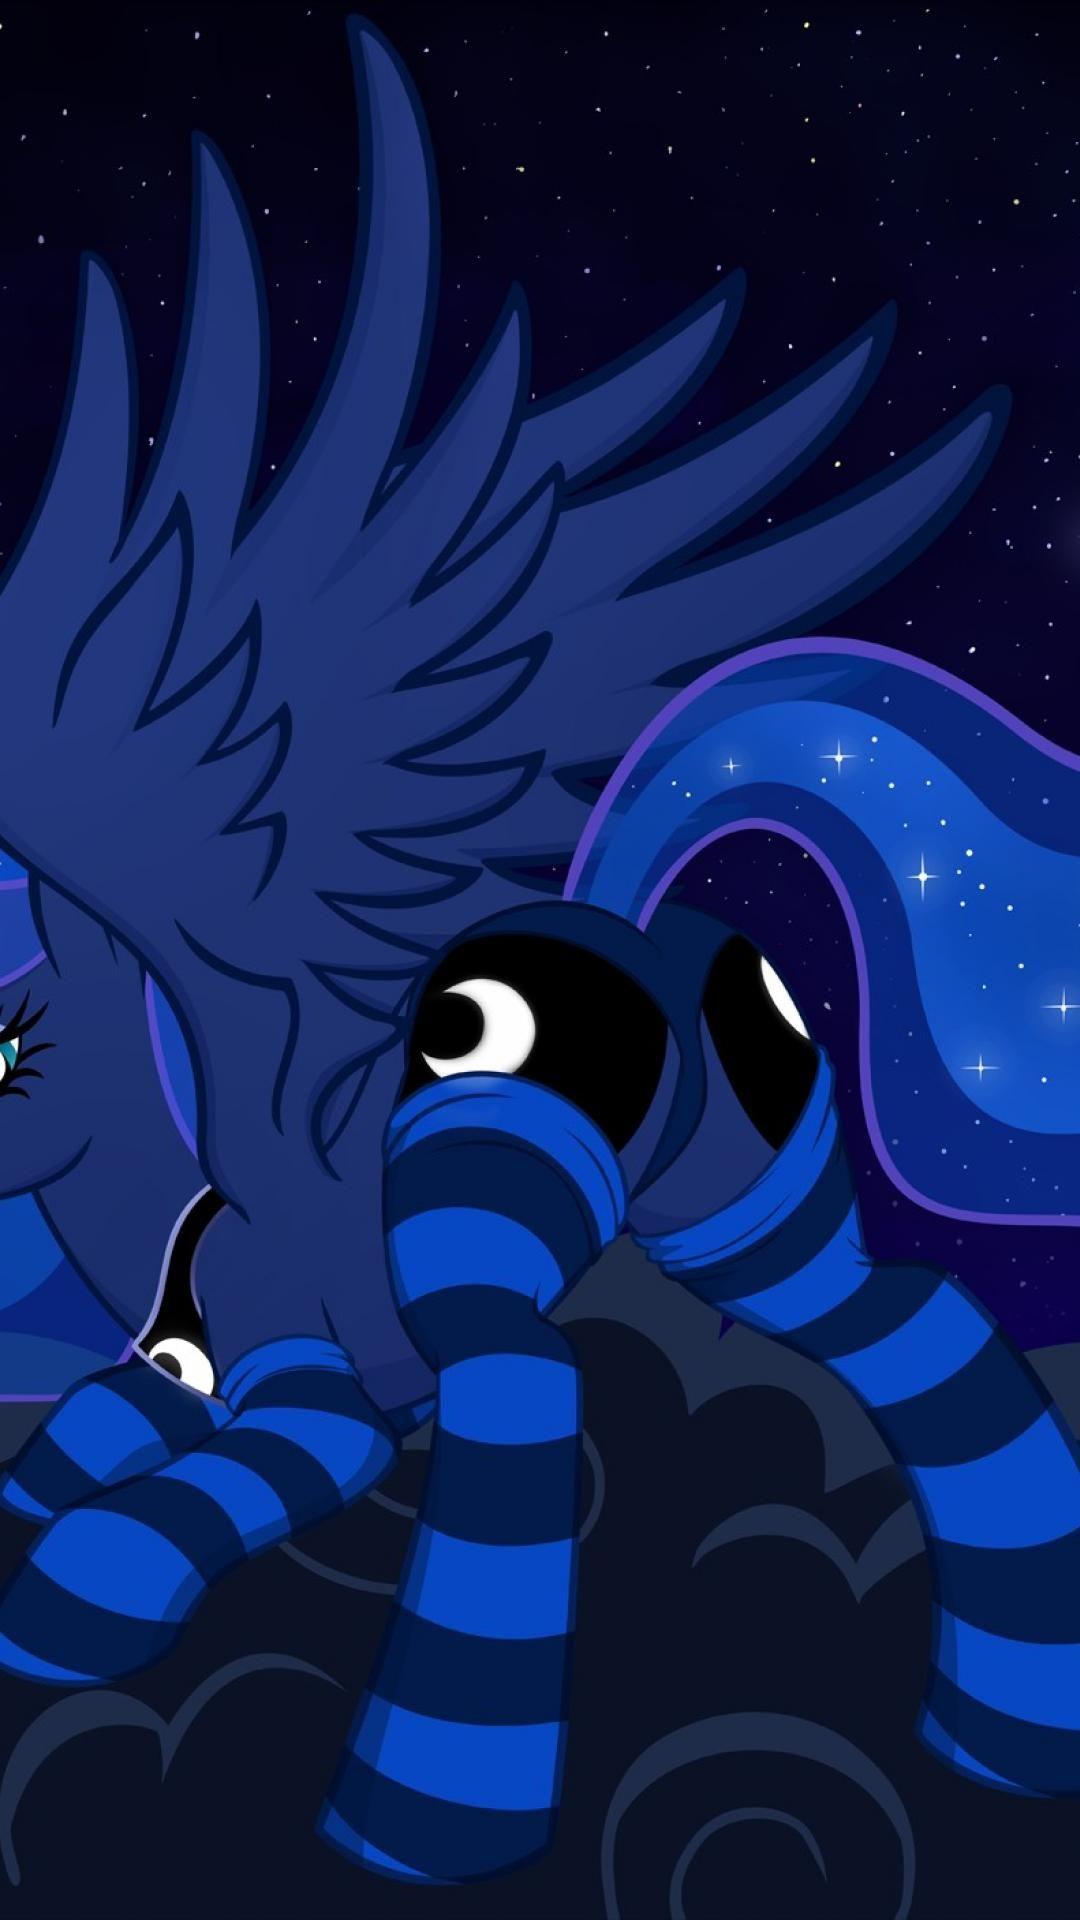 Luna my little pony: friendship is magic wallpaper